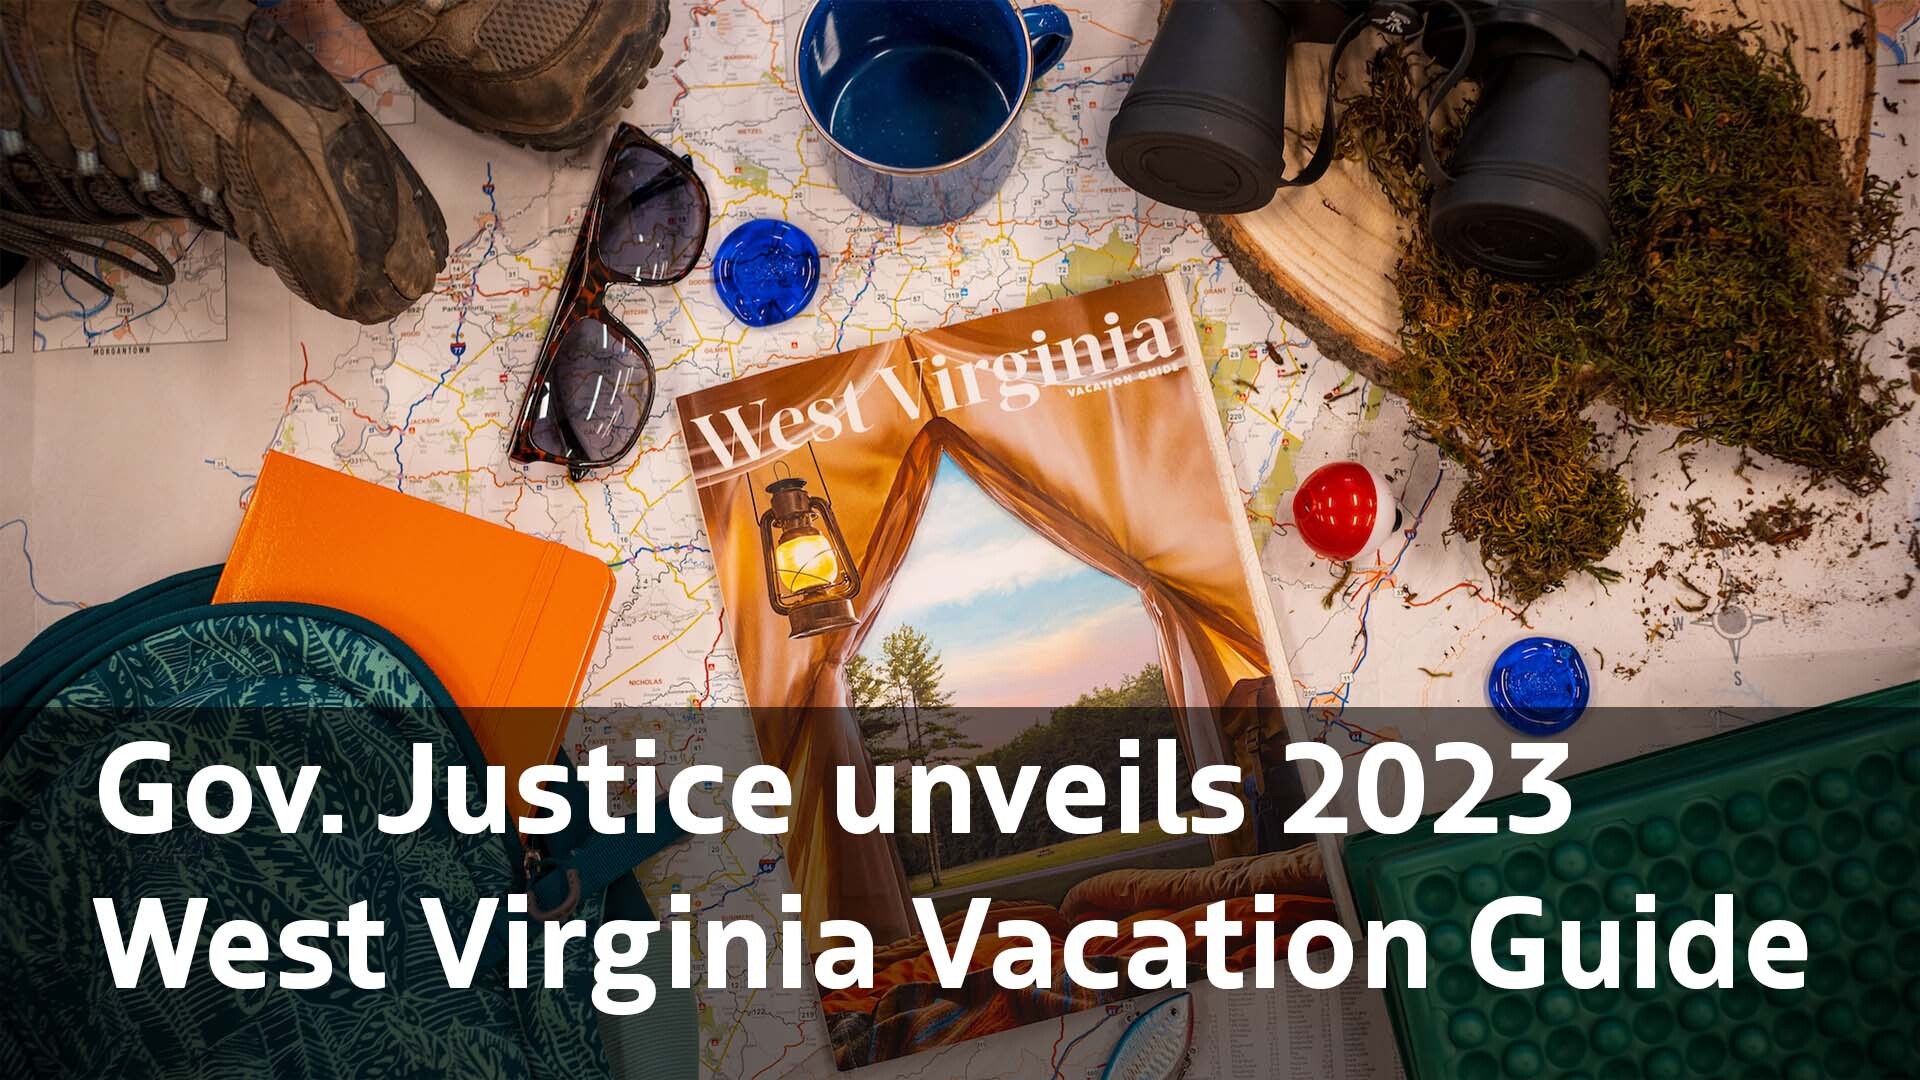 Gov. Justice unveils 2023 West Virginia Vacation Guide